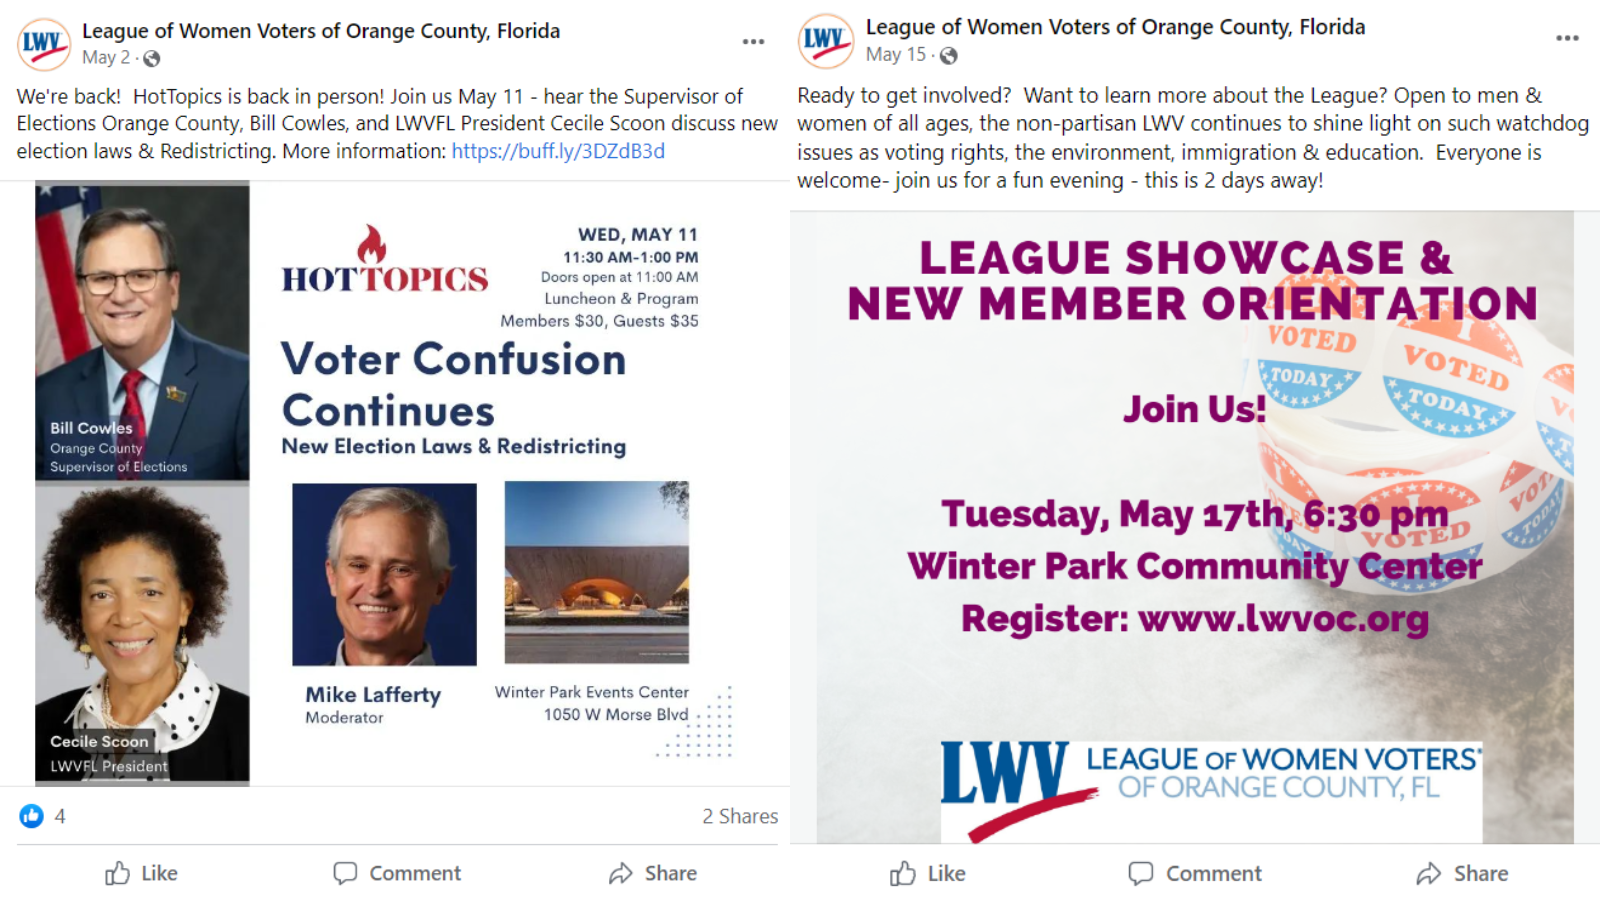 Screenshots of Facebook posts from LWV Orange County, FL